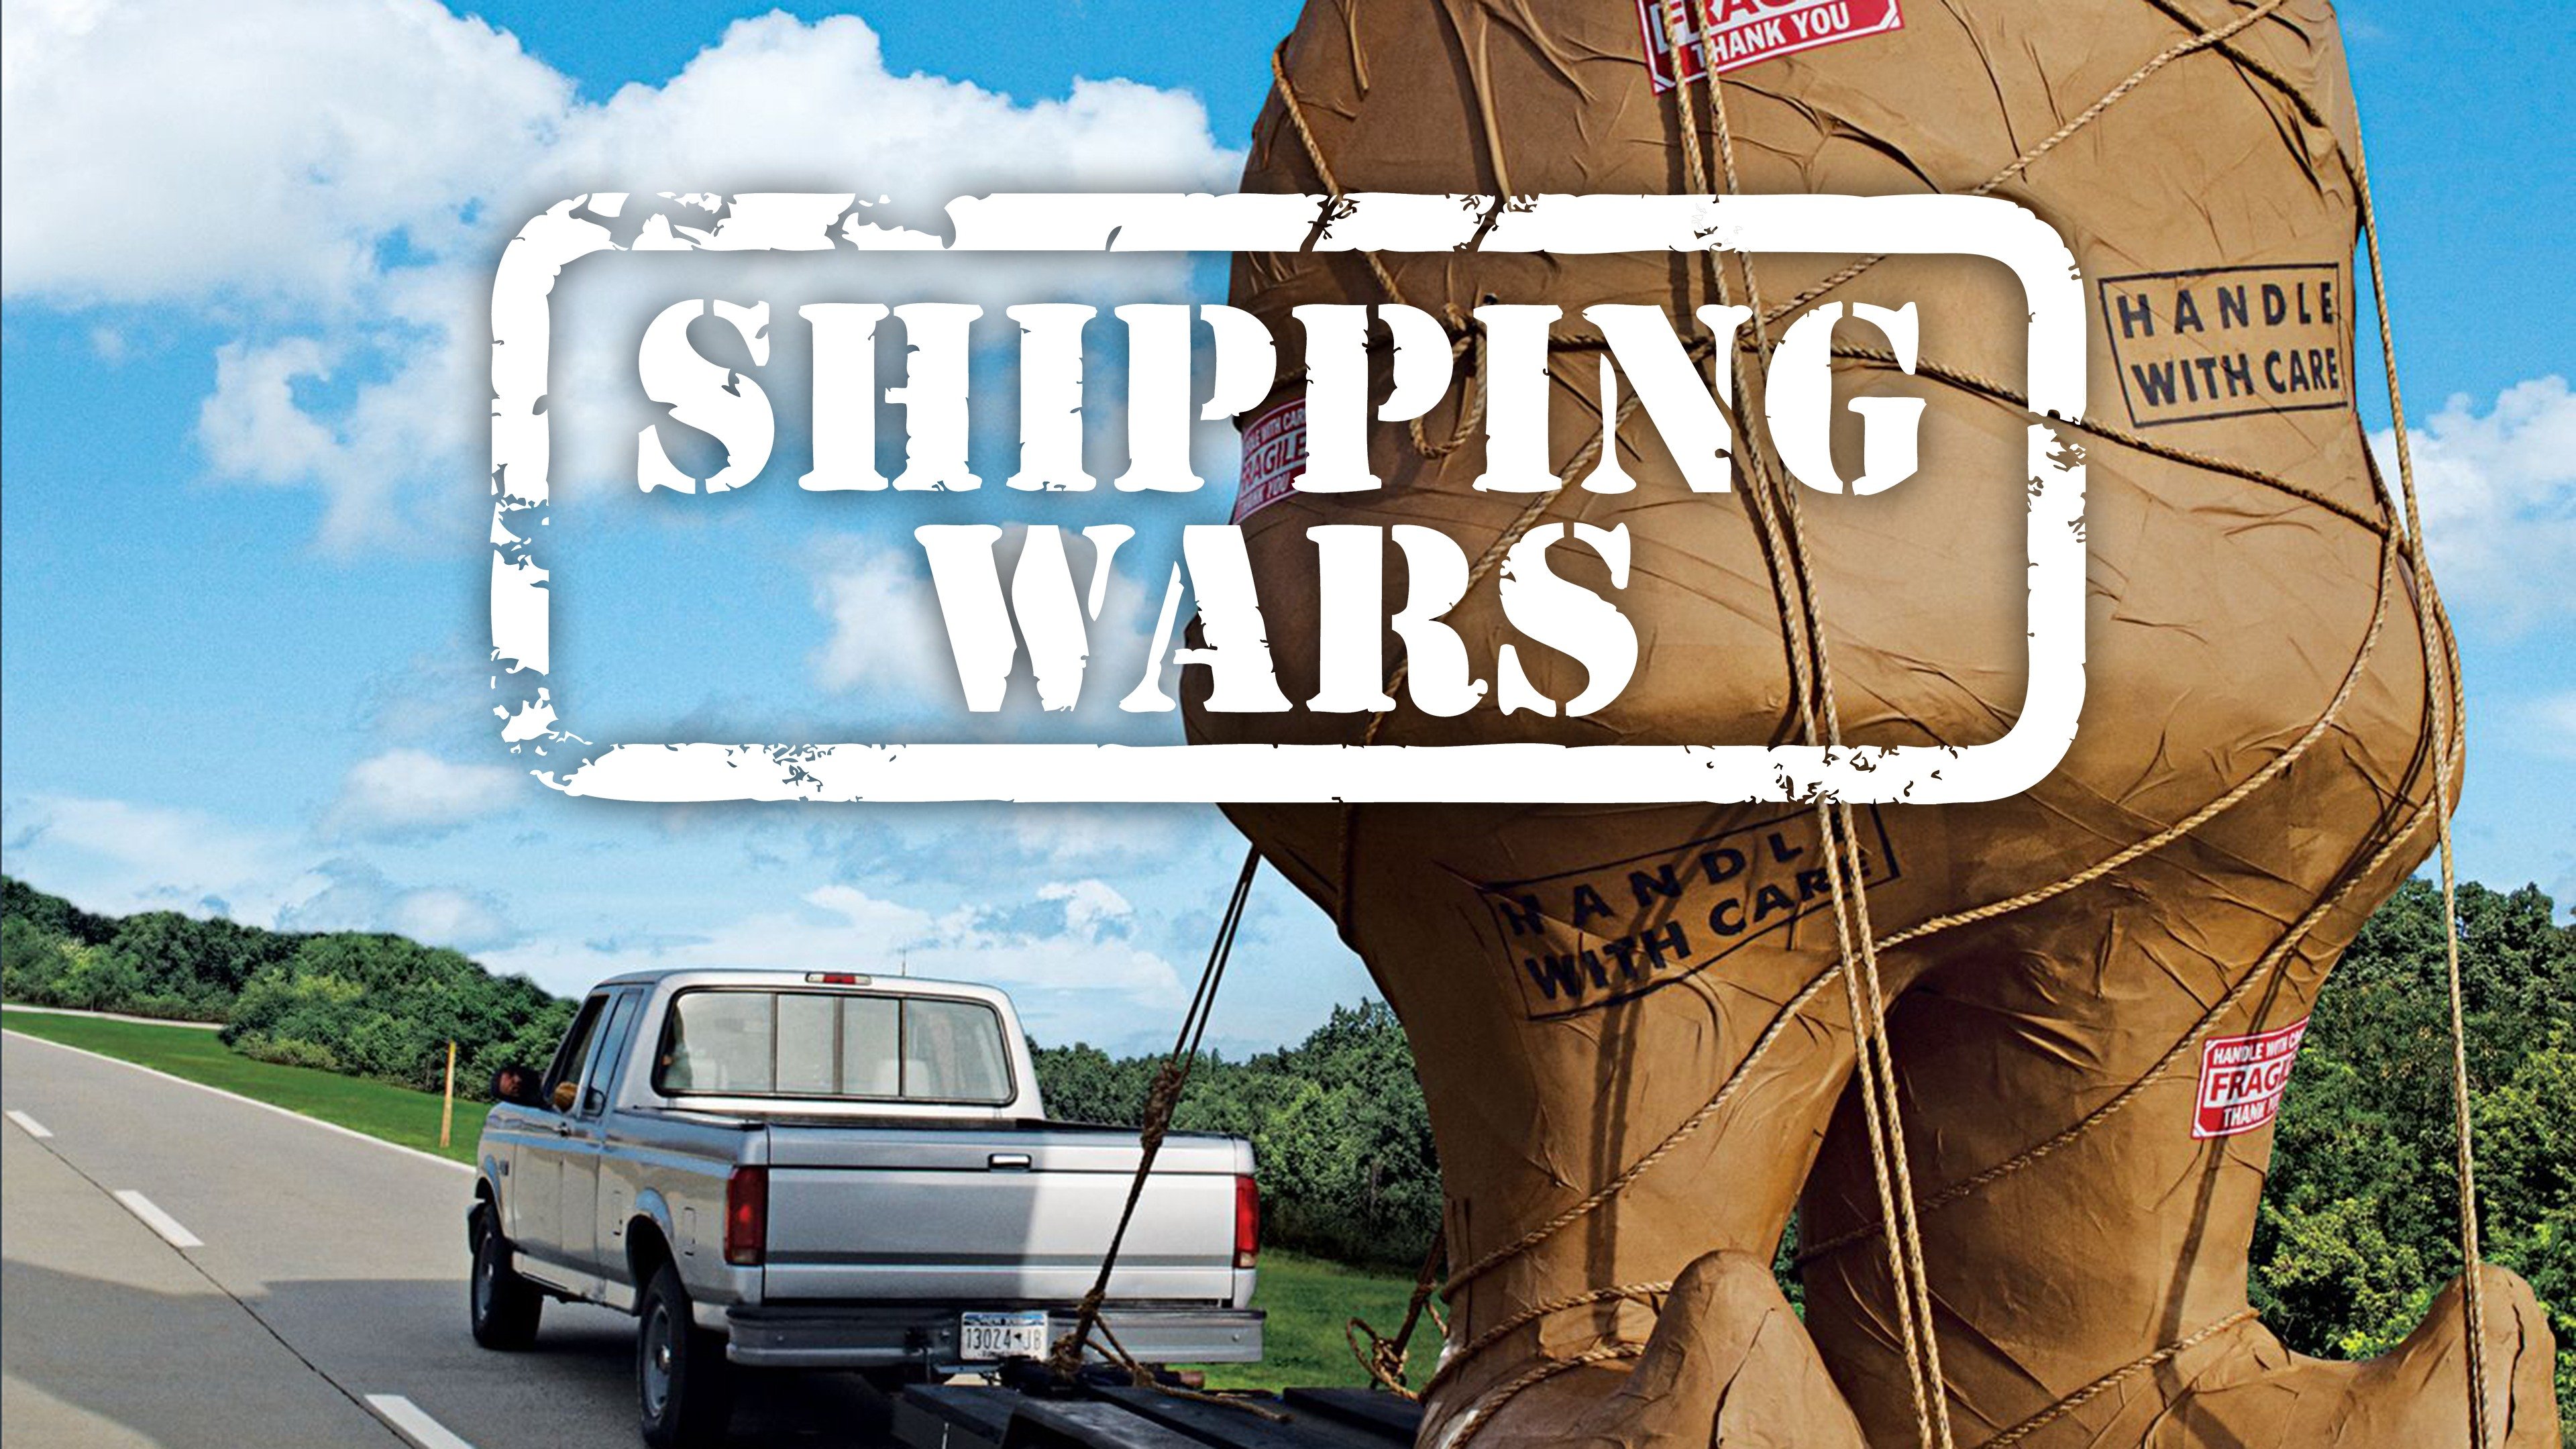 robbie shipping wars truck